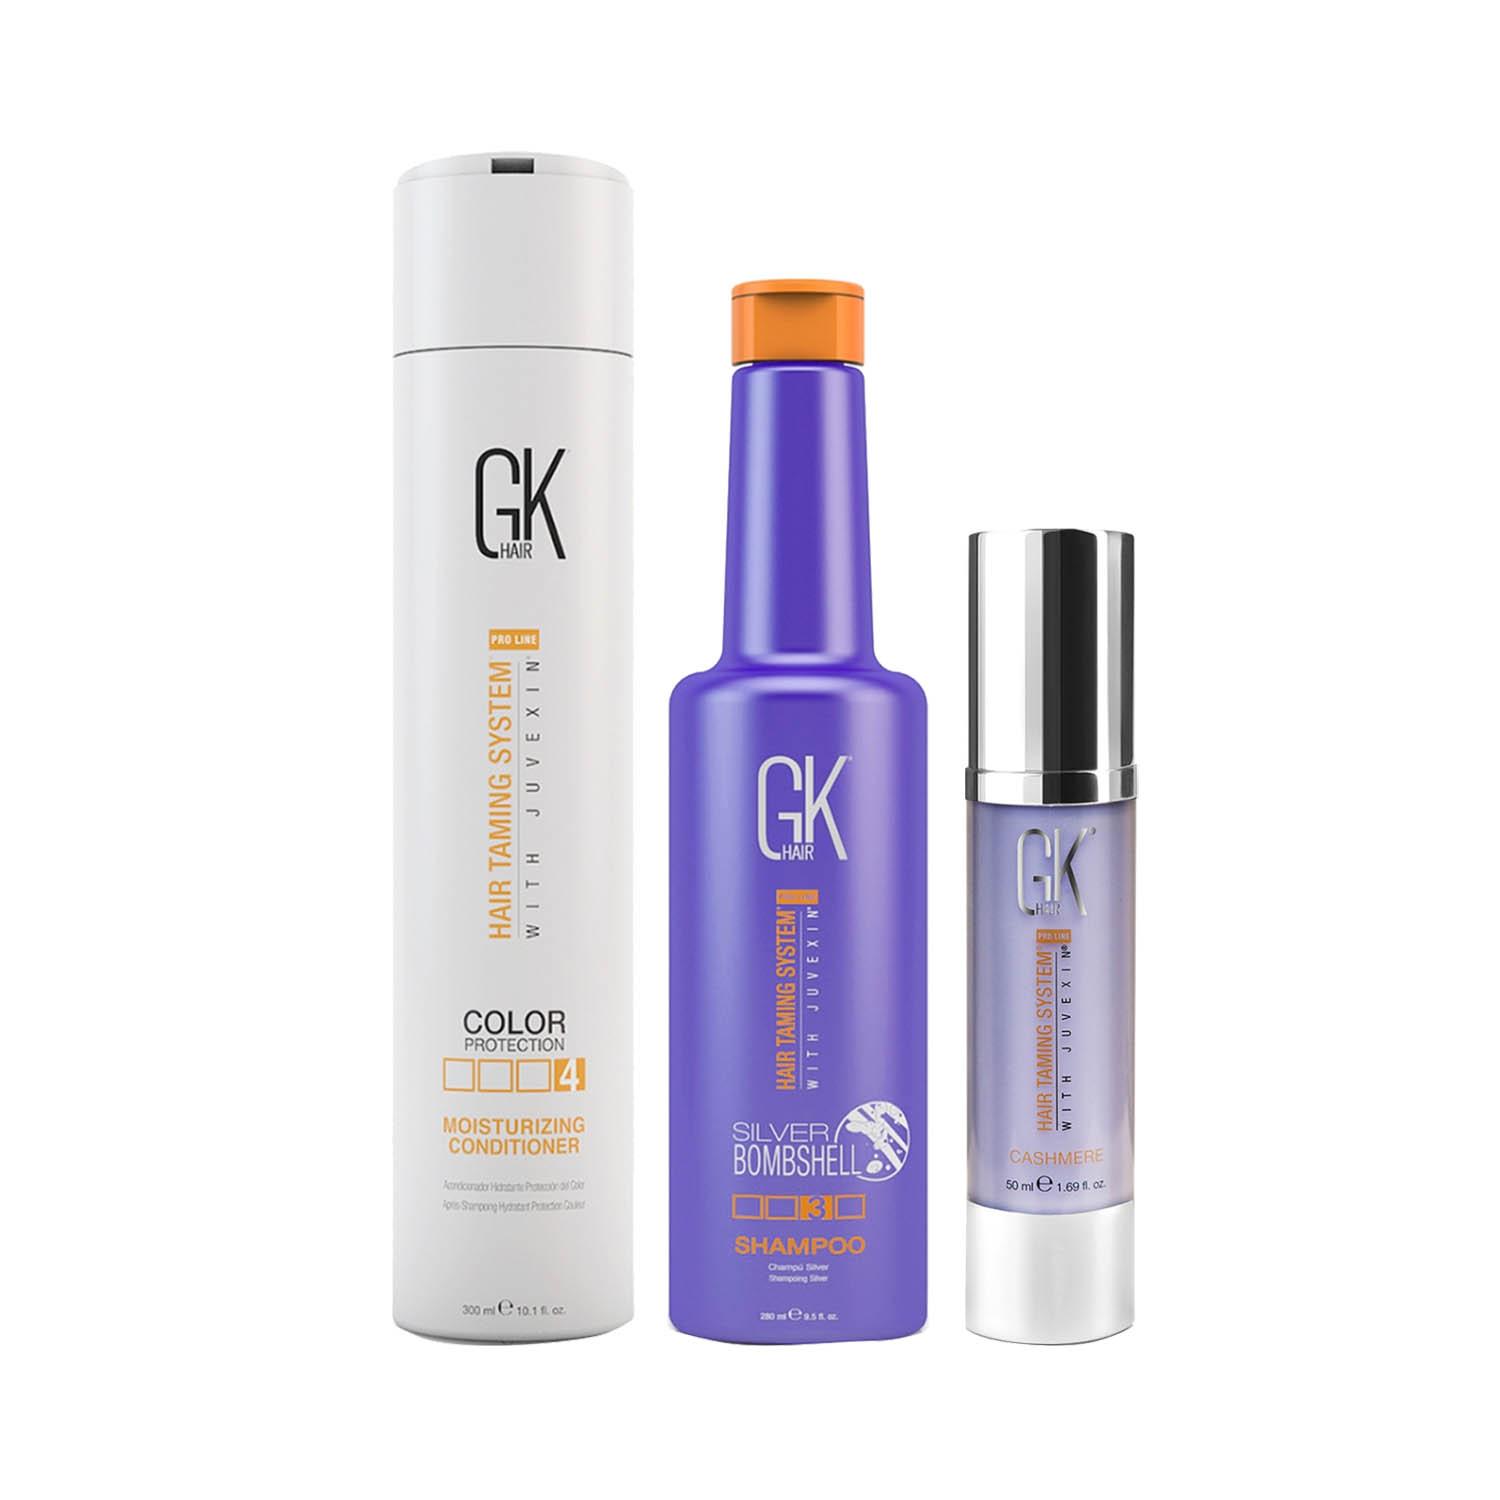 GK Hair | GK Hair Silver Bombshell Shampoo 280ml Moisturizing Conditioner 300ml and Cashmere 50ml